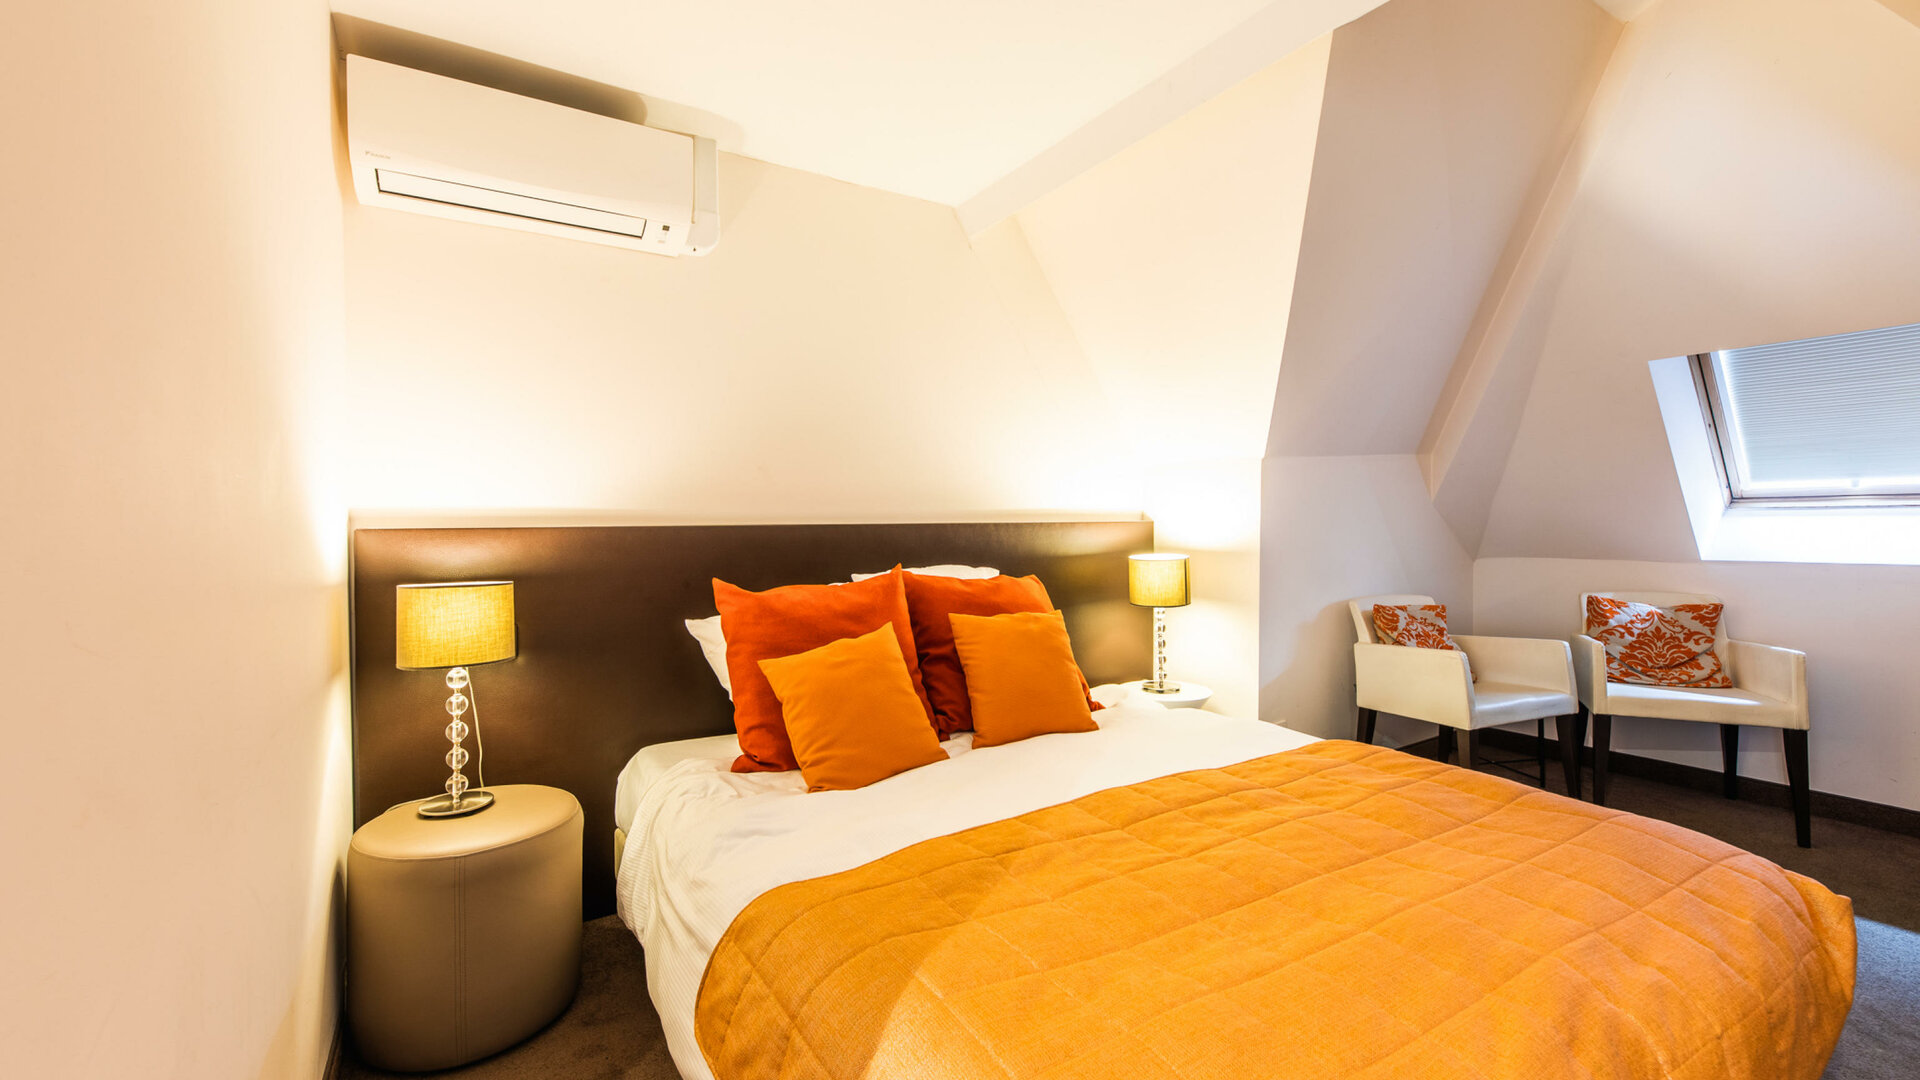 Hotel Malpertuus Riemst - Standard Double room